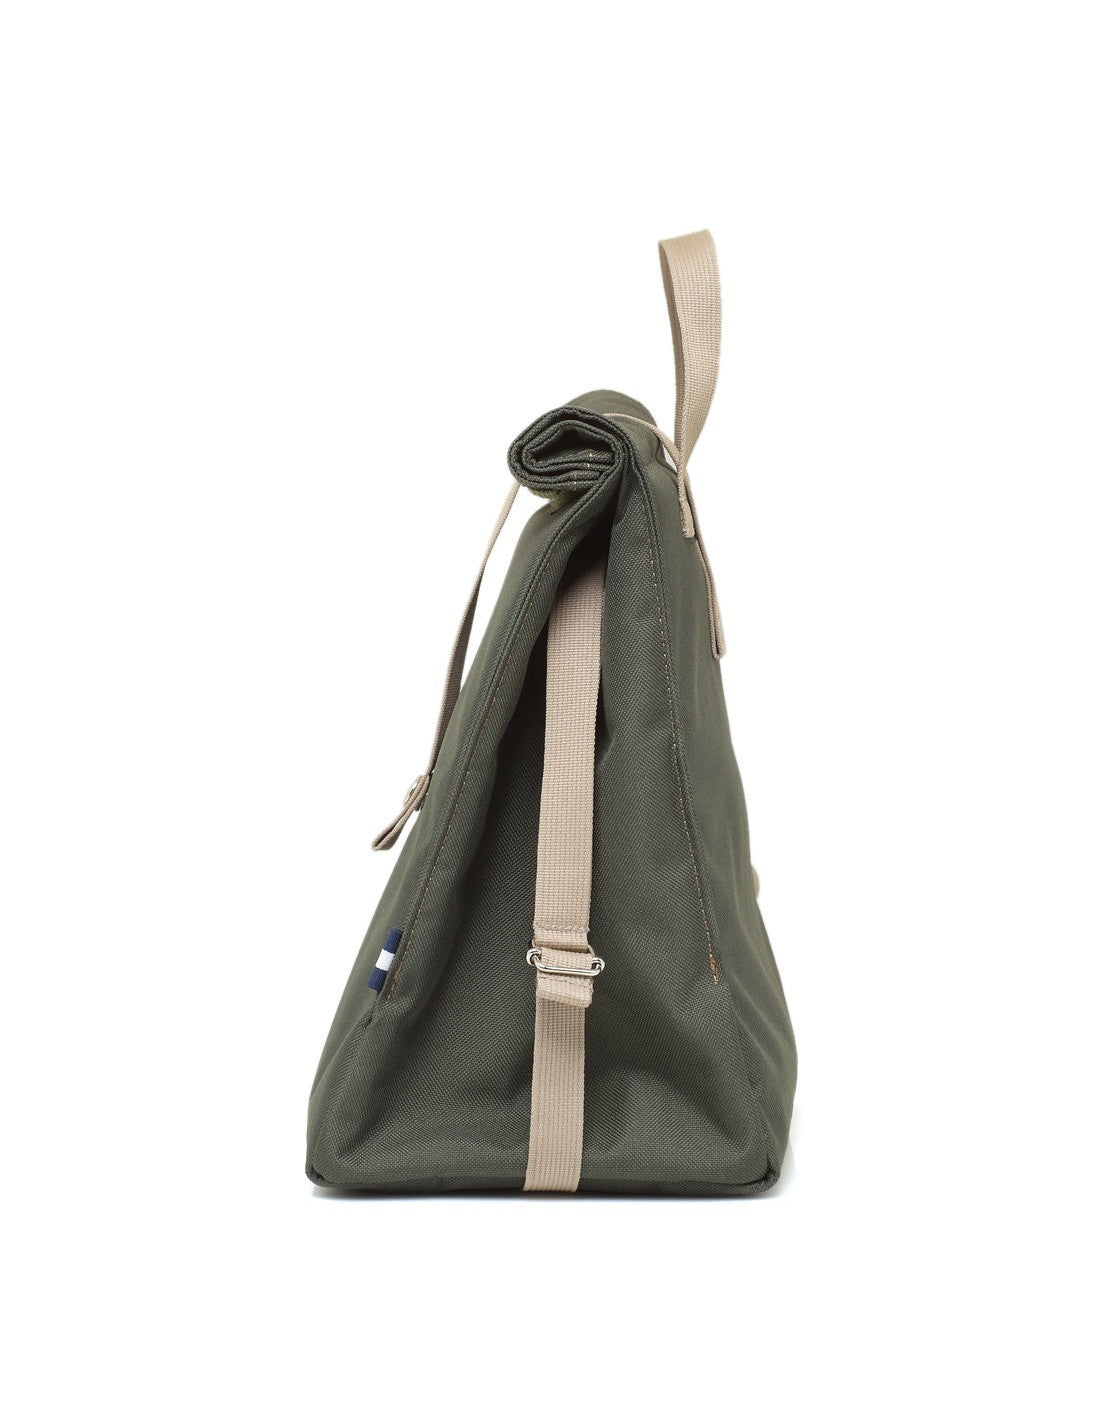 The Lunch Bags Original Plus Olive Ισοθερμική Τσάντα 8lt